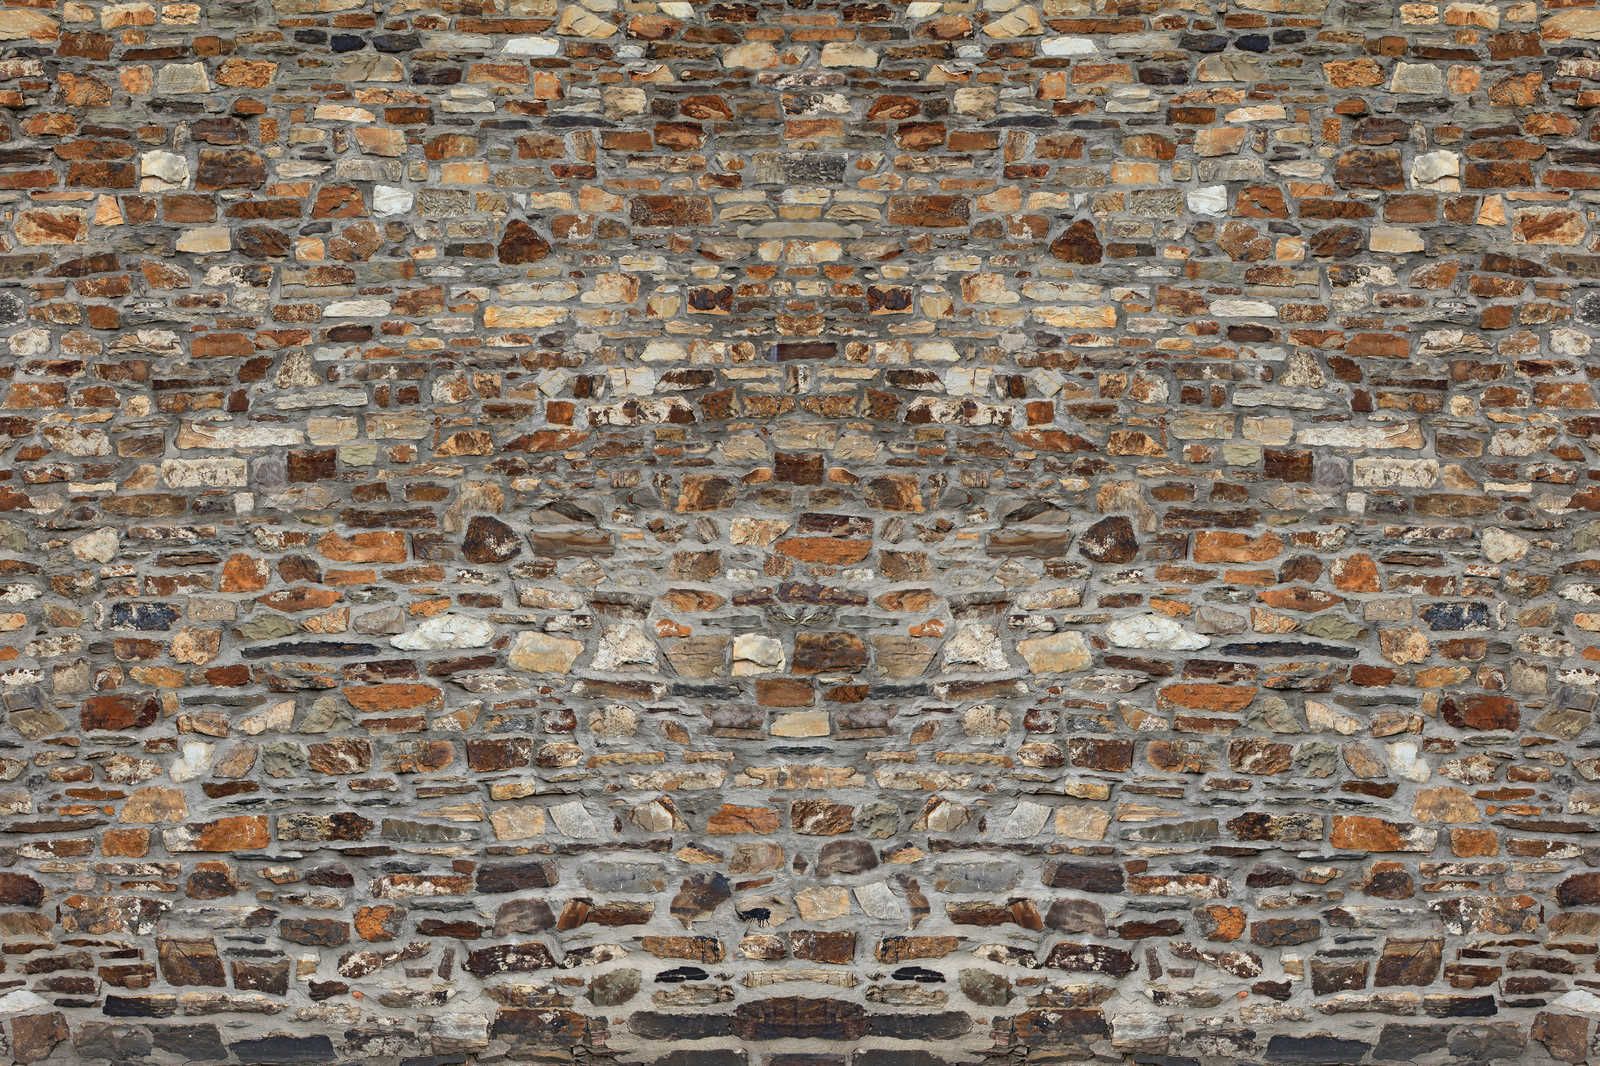             Leinwandbild 3D Mauer alte Ziegel & rustikaler Steinoptik – 1,20 m x 0,80 m
        